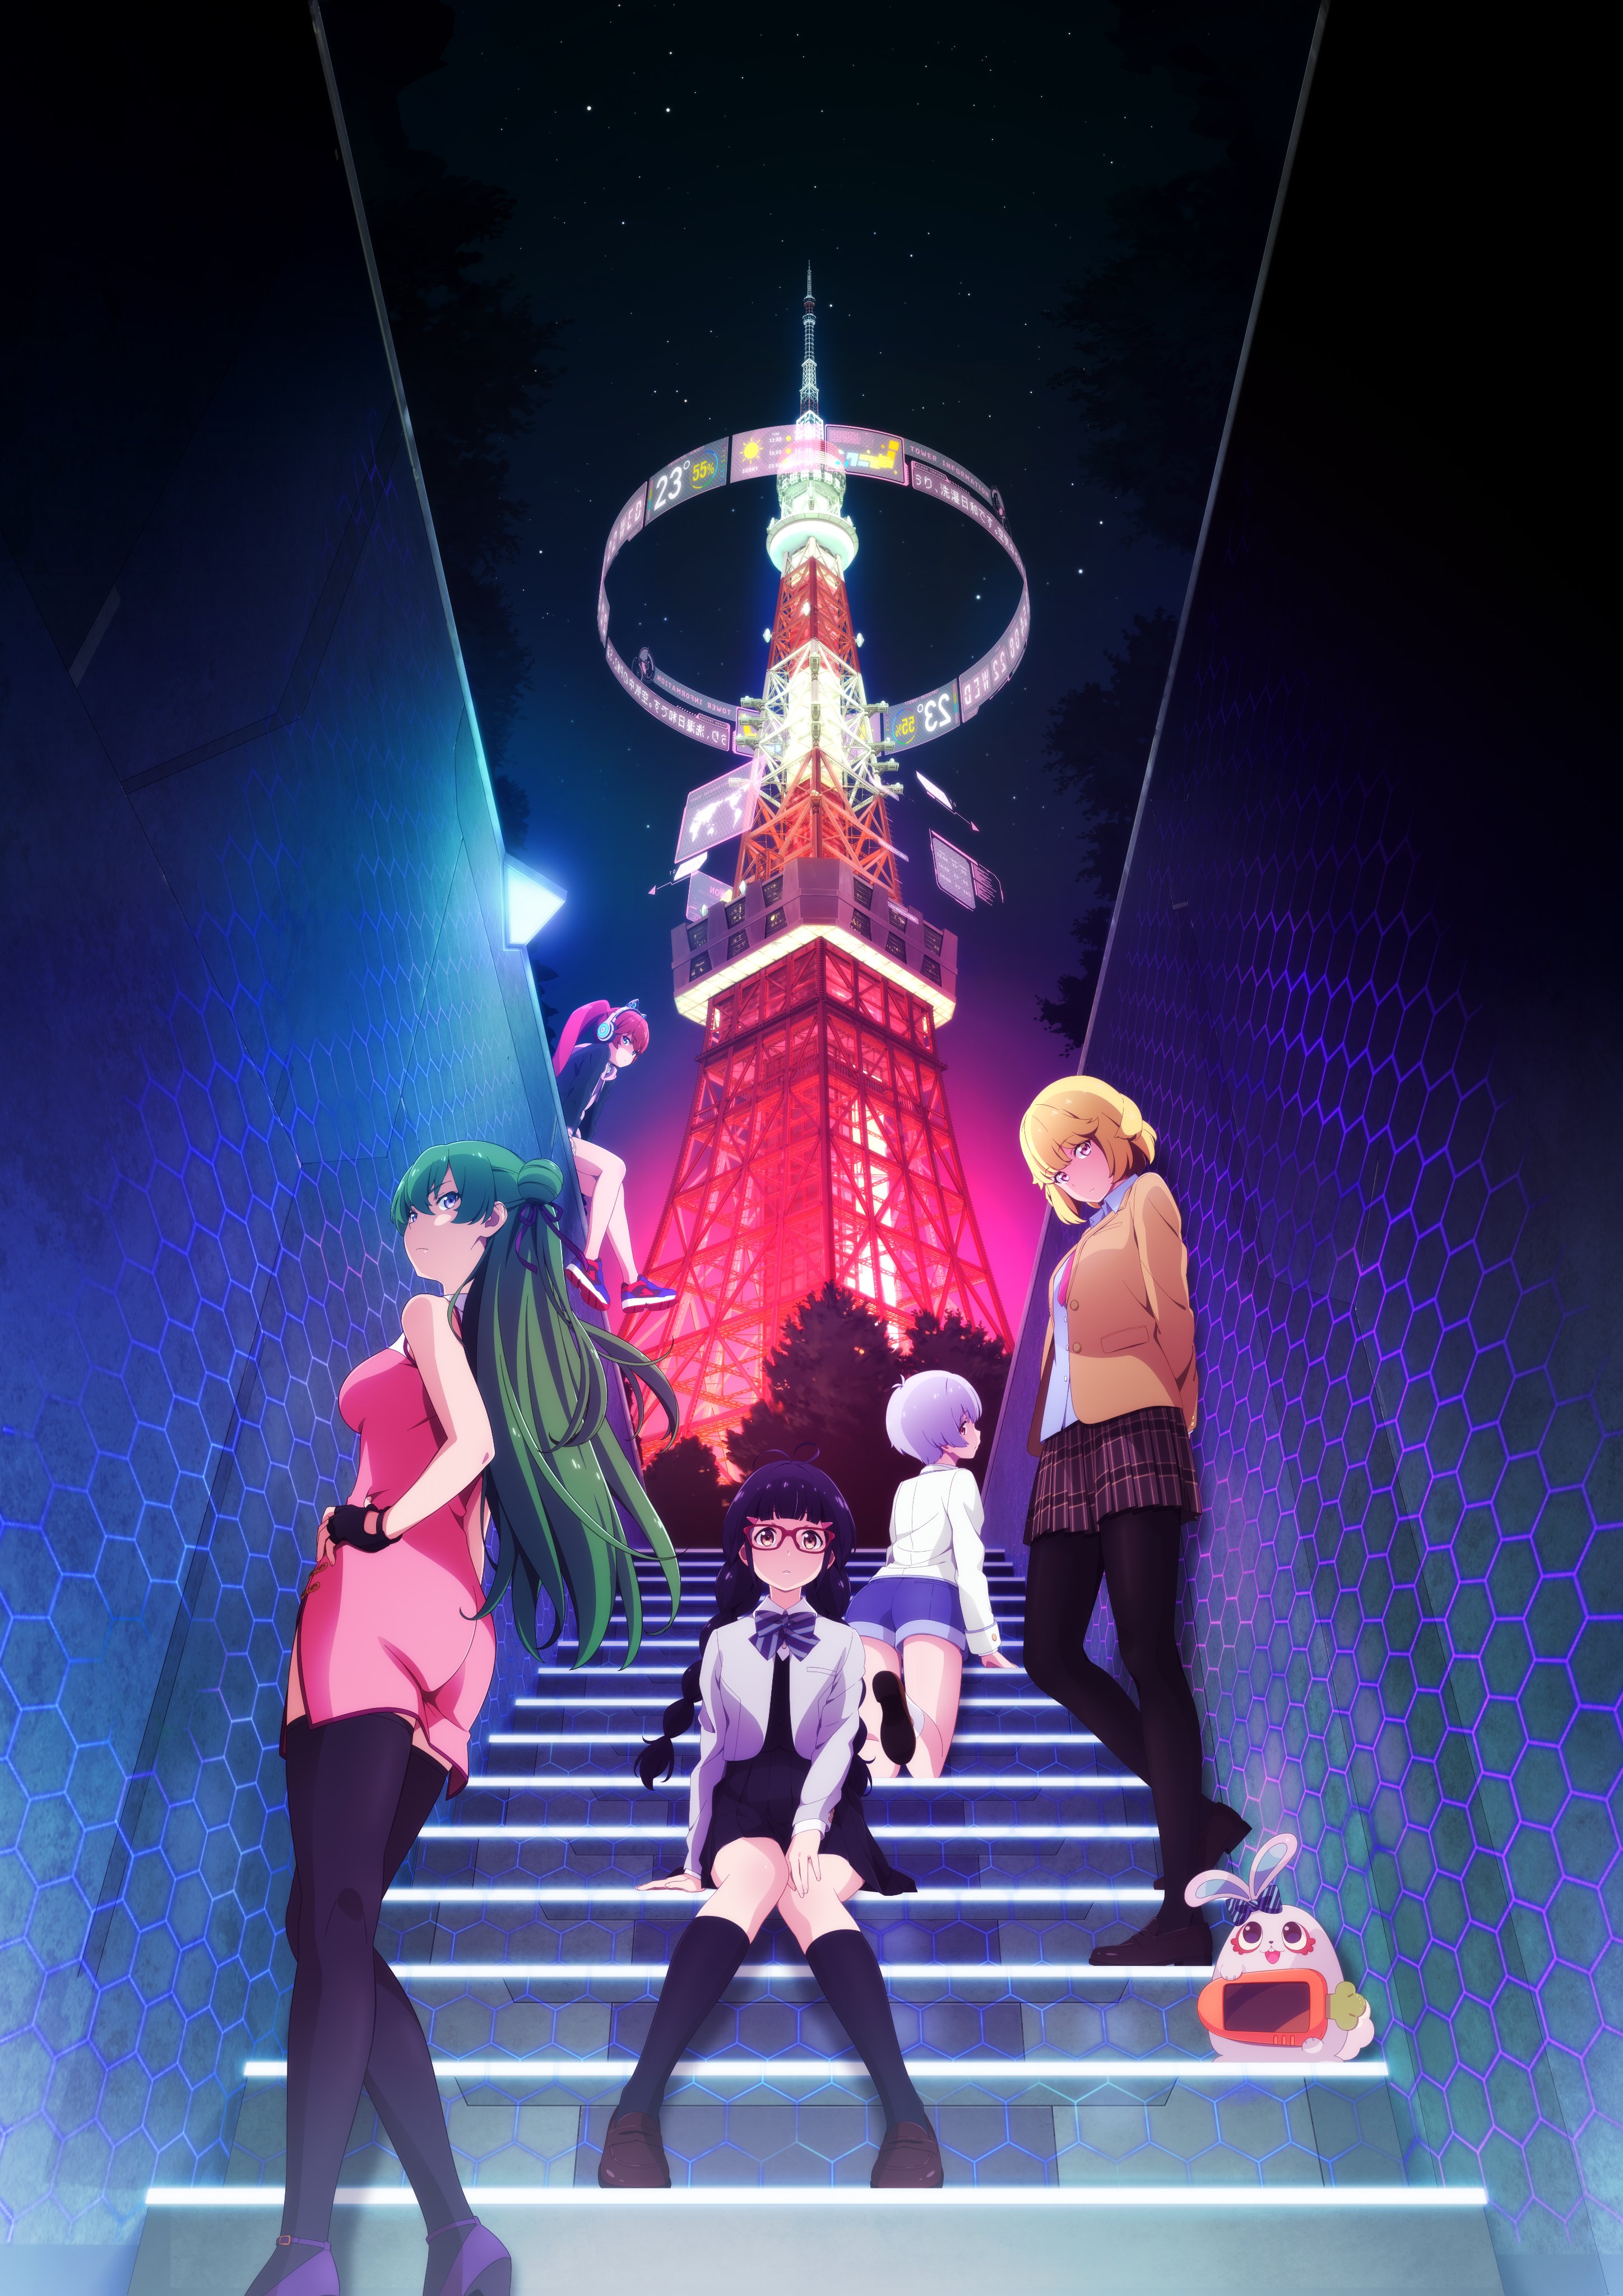 Trailer Bande-annonce vidéo Love Flops Rensai Flops Anime Original Kadokawa RomCom Comédie Romantique Studio Passione date de sortie octobre 2022 Anime automne 2022